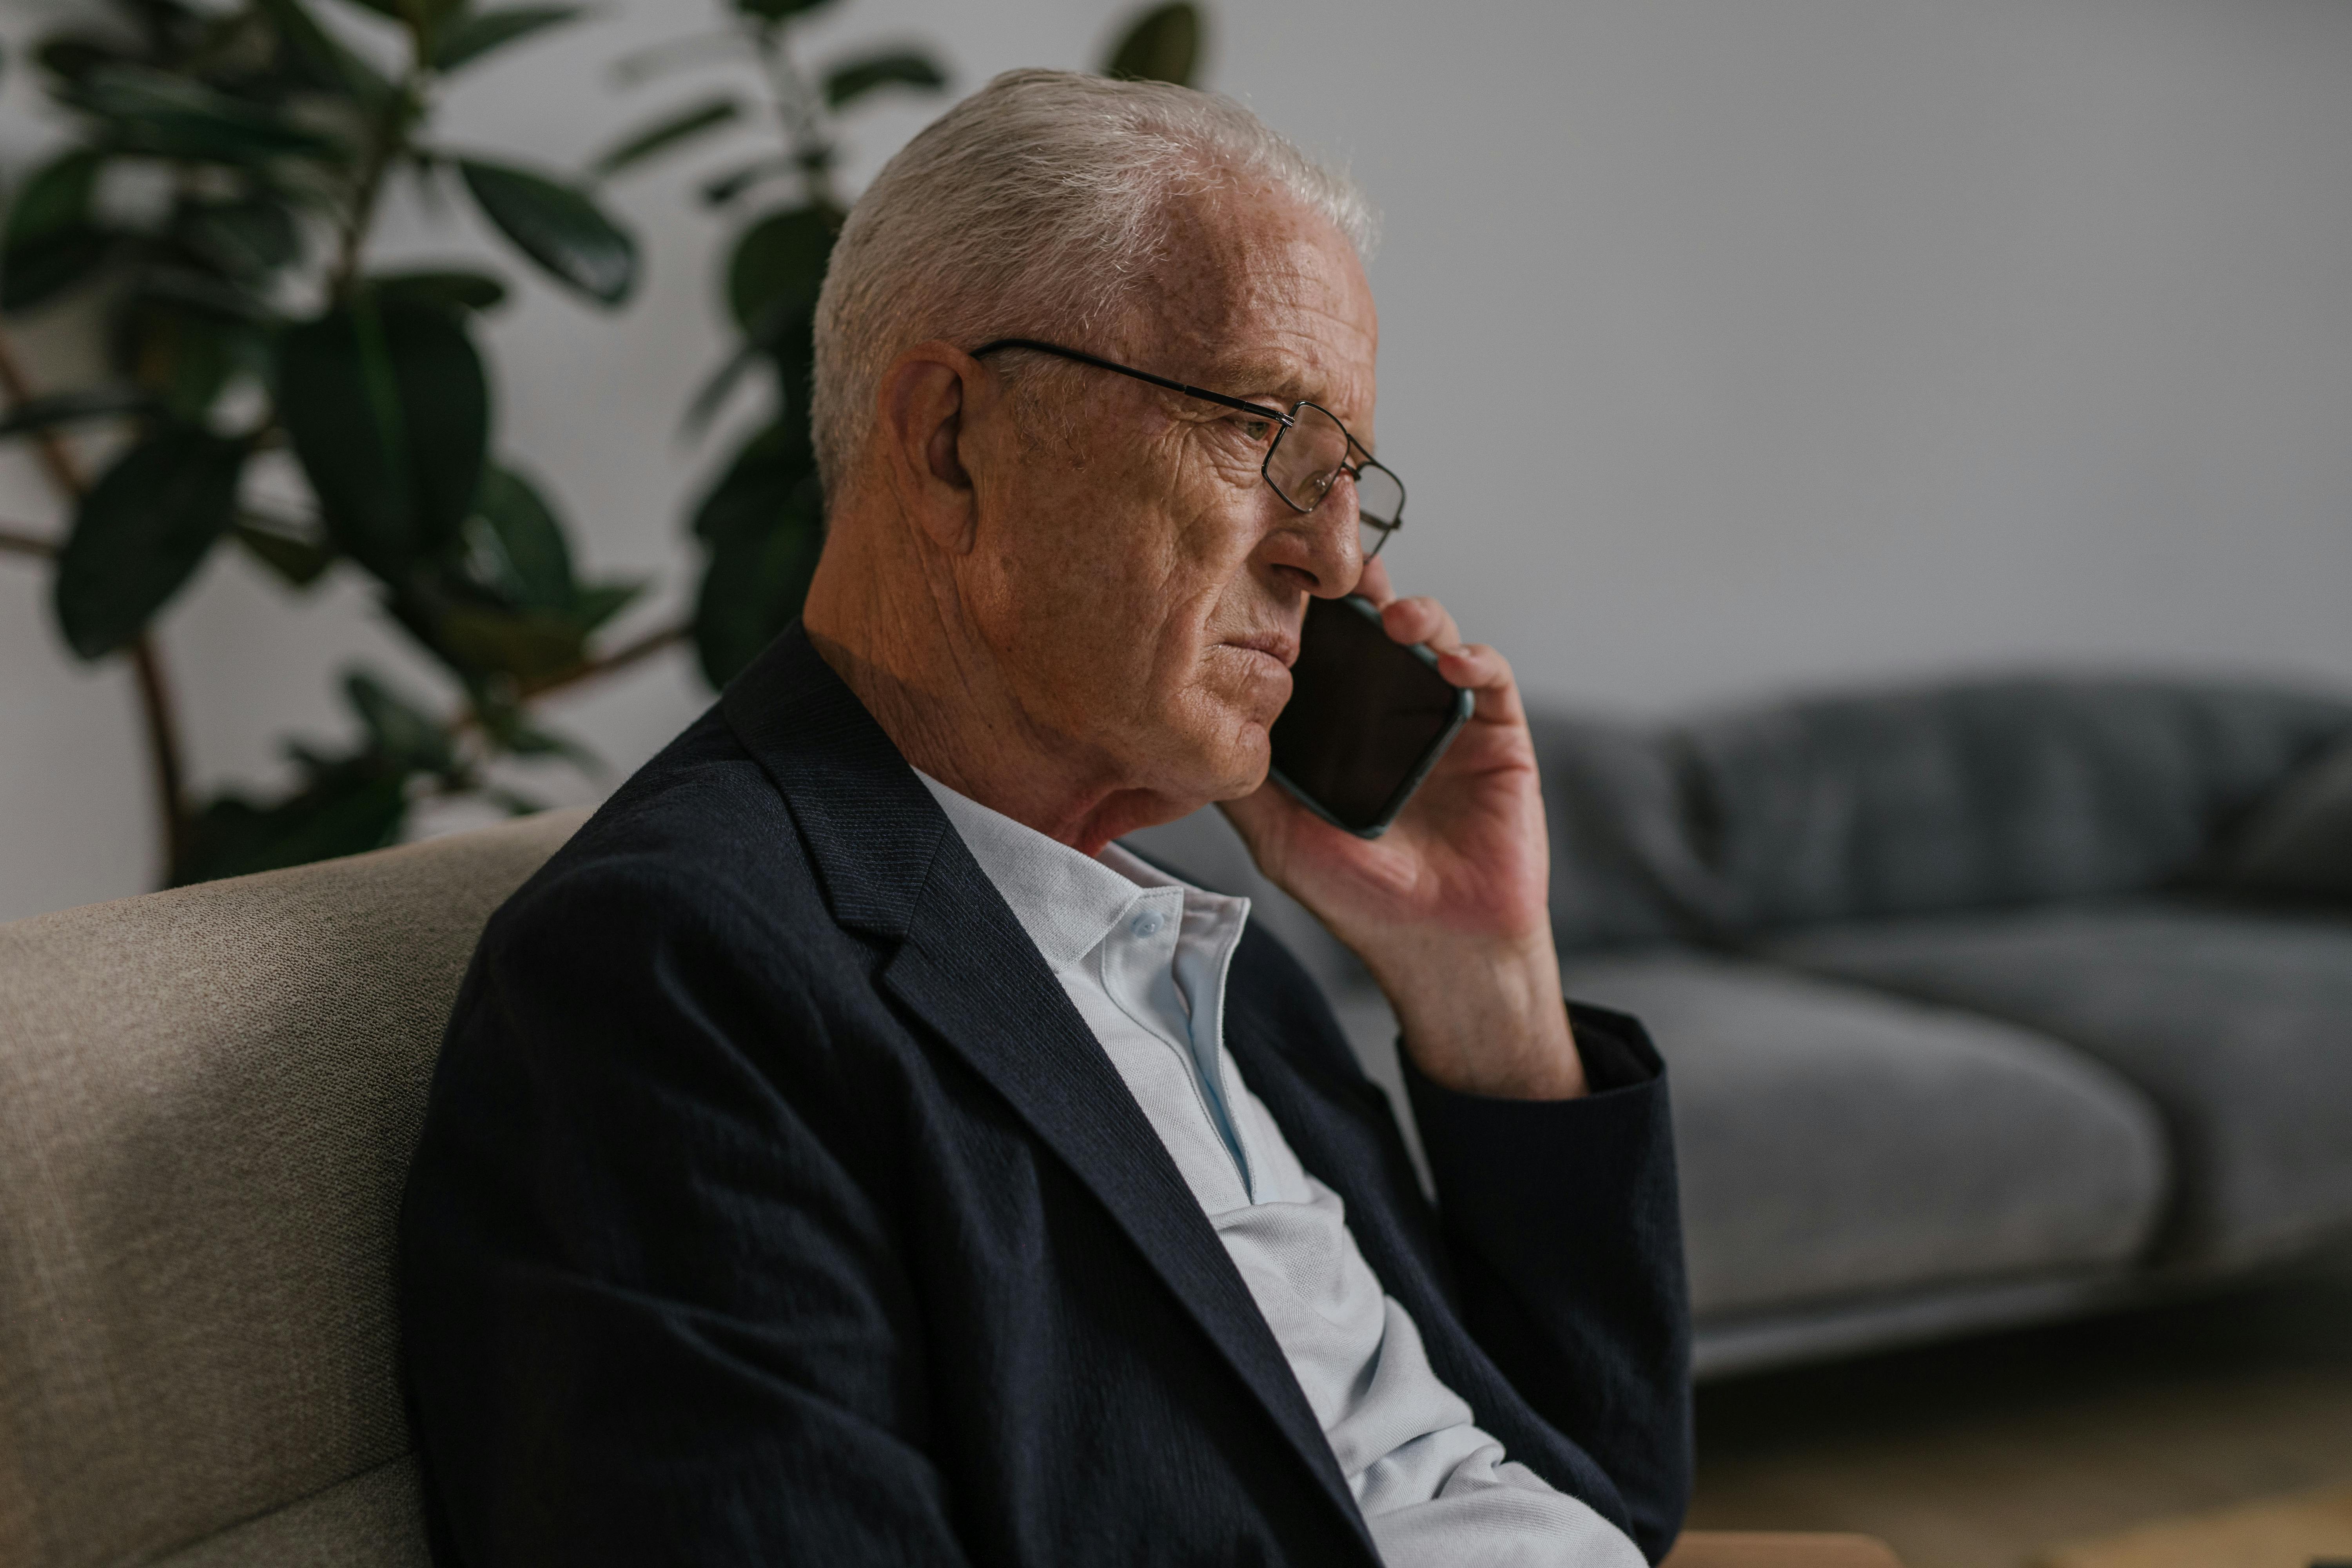 Elderly man talks on the phone | Source: Pexels